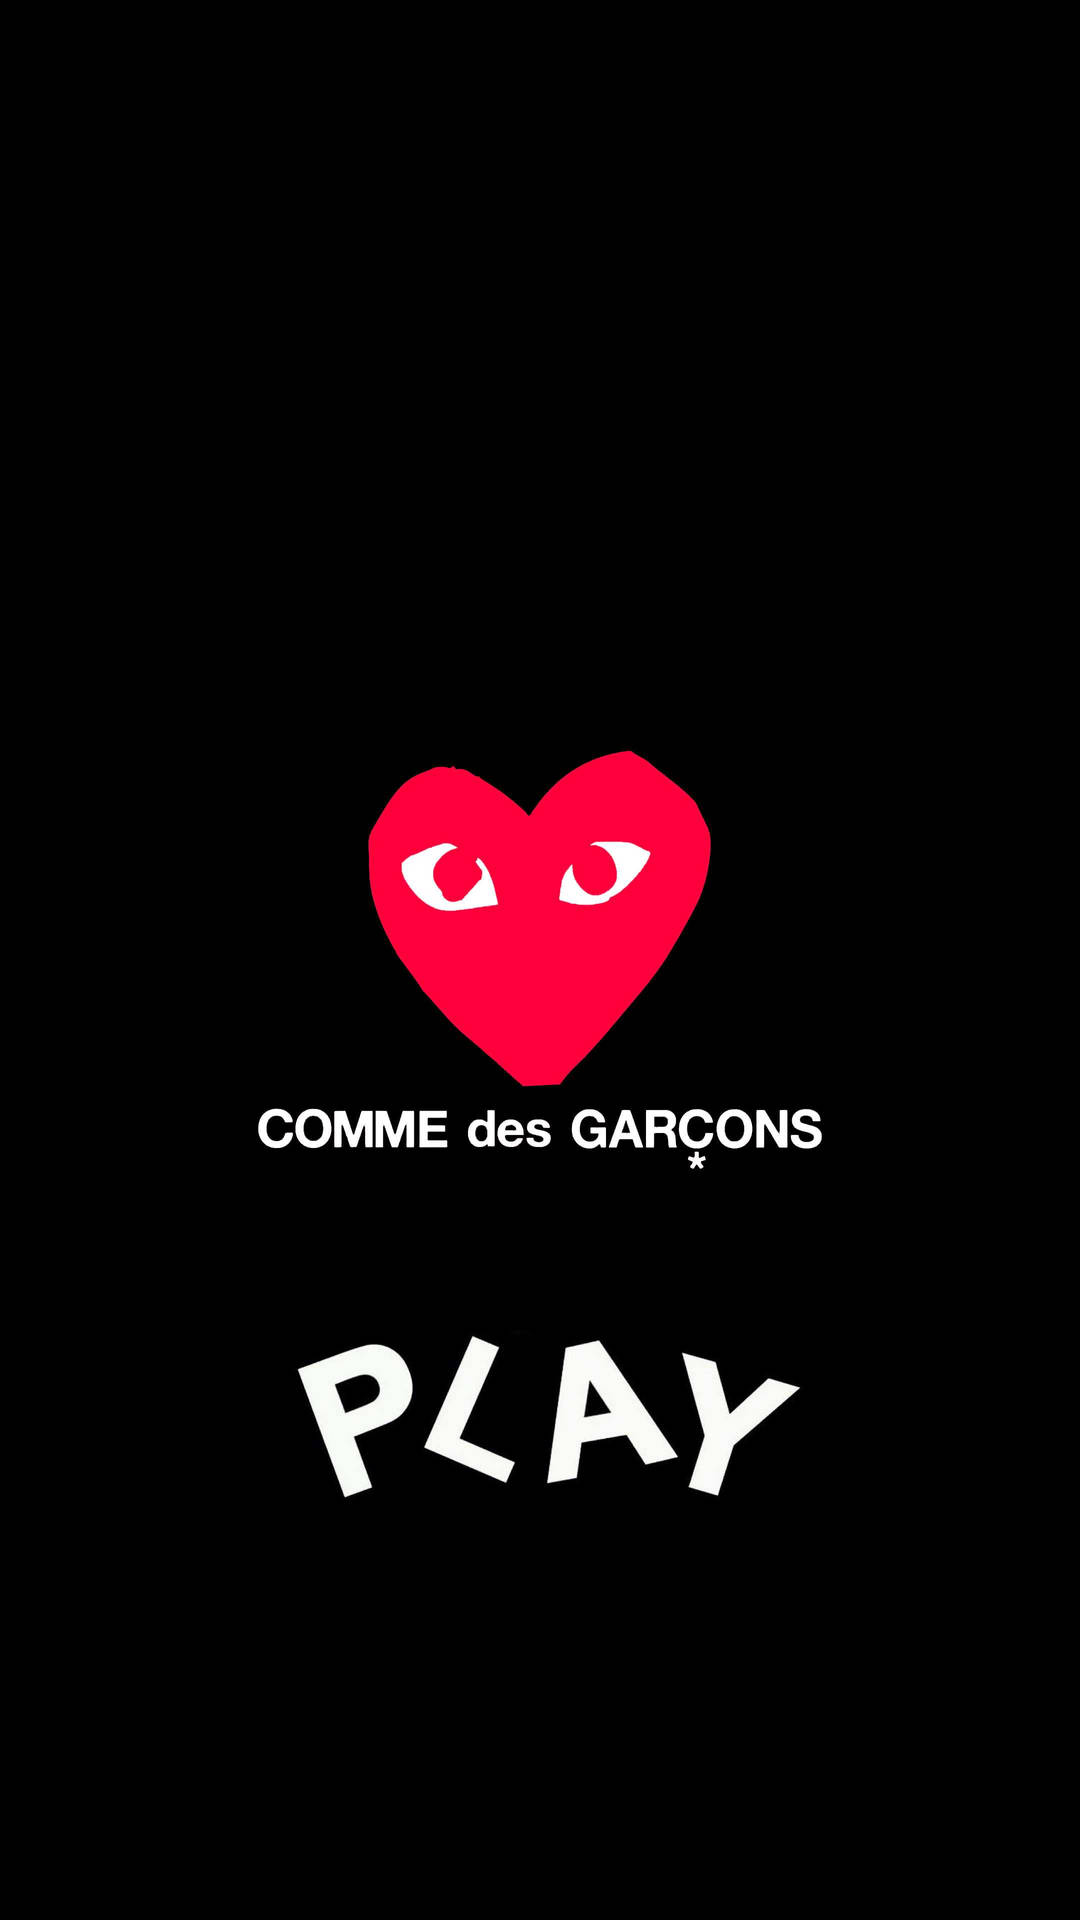 Cdgcomme Des Garcons Play Blir En Fantastisk Bakgrundsbild Till Din Dator Eller Mobil. Wallpaper